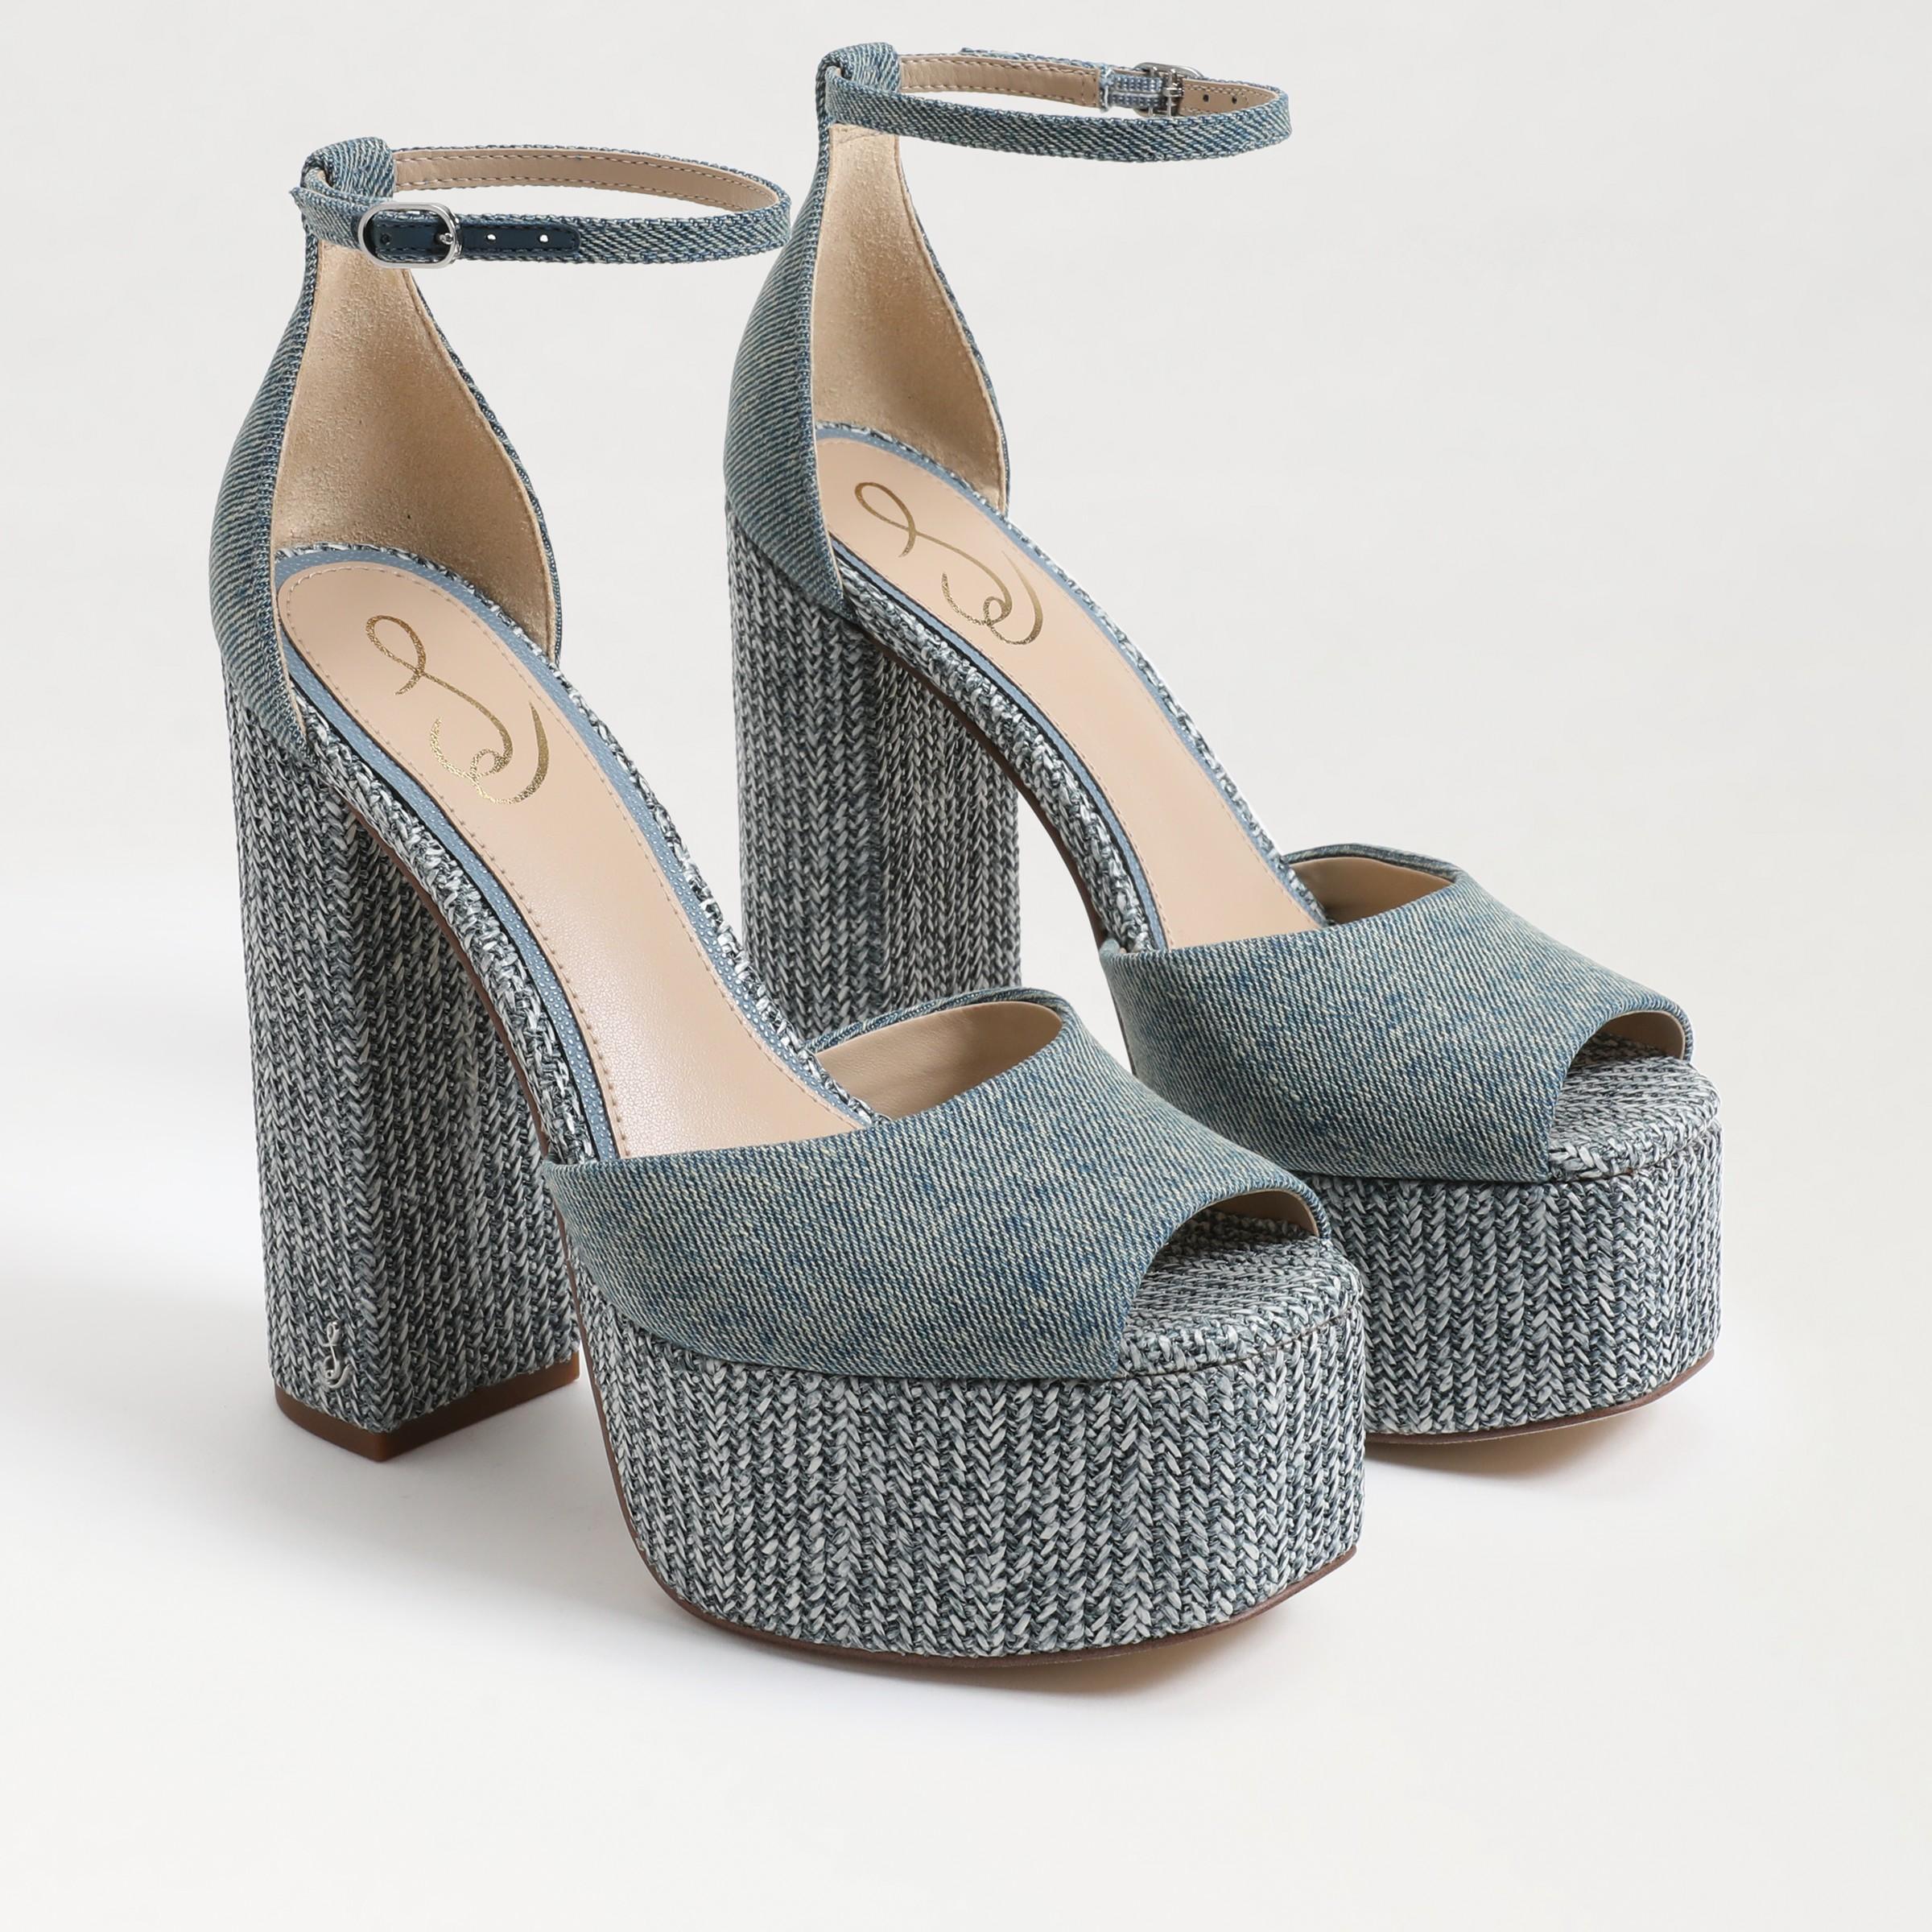 Sam Edelman Kori Ankle Strap Peep Toe Platform Sandal Product Image